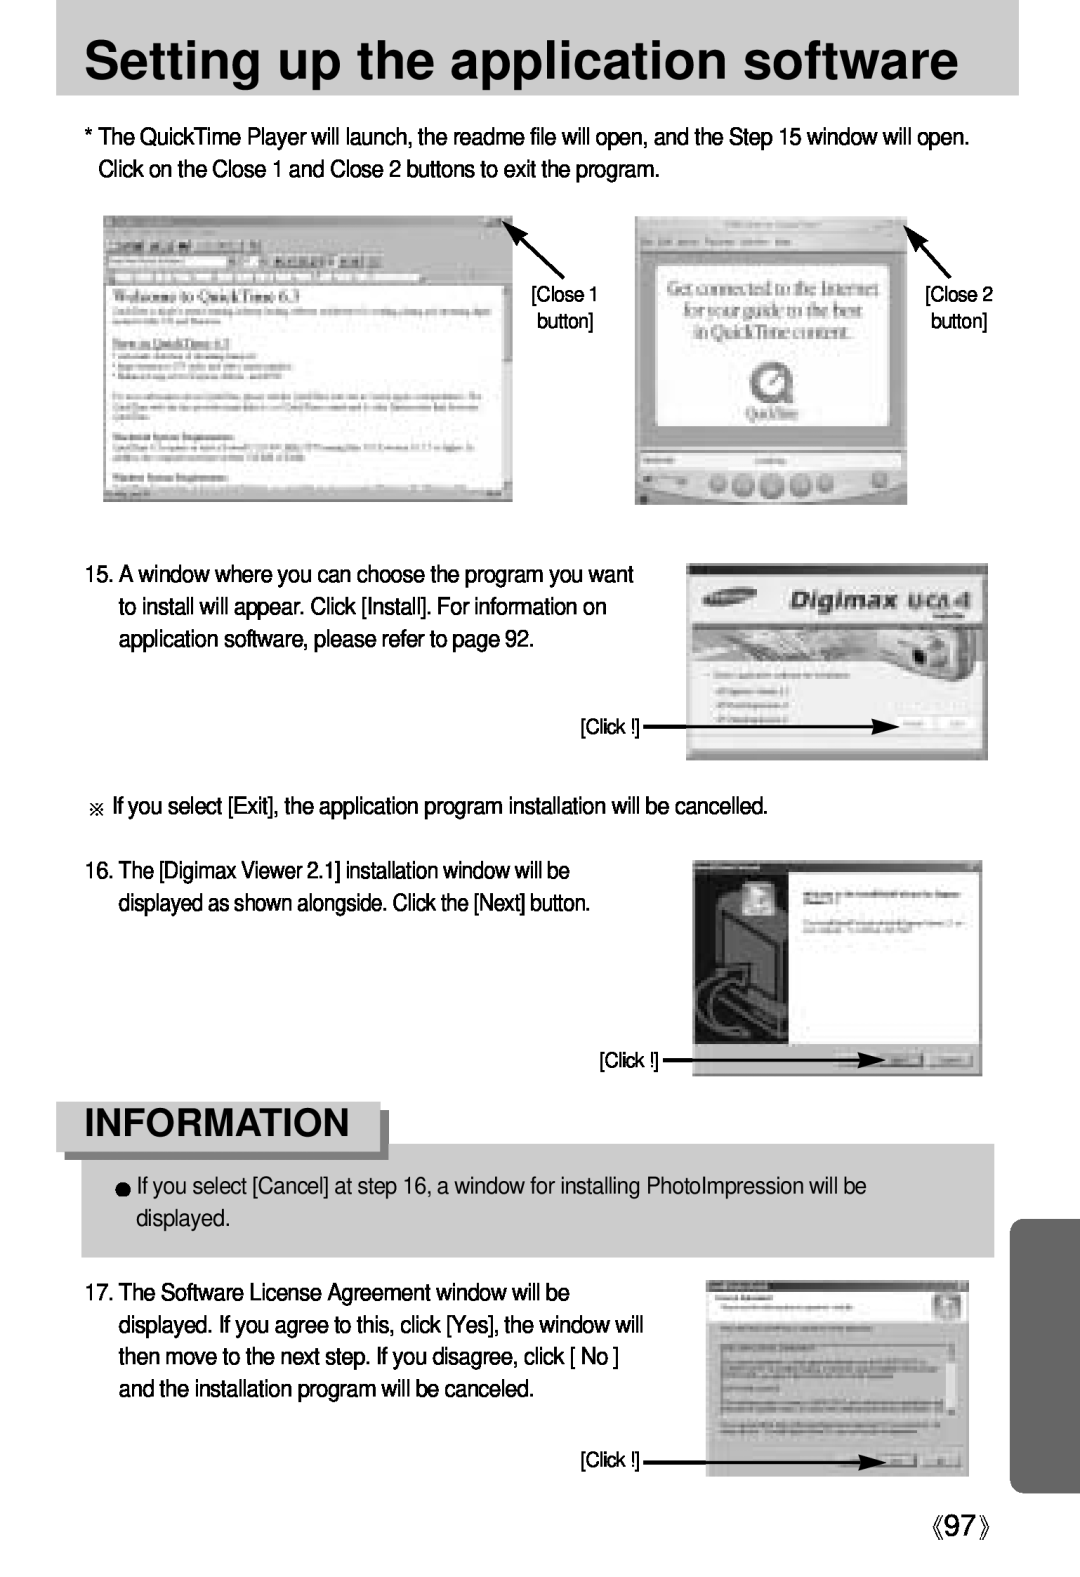 Samsung Digimax U-CA user manual Setting up the application software, Information 